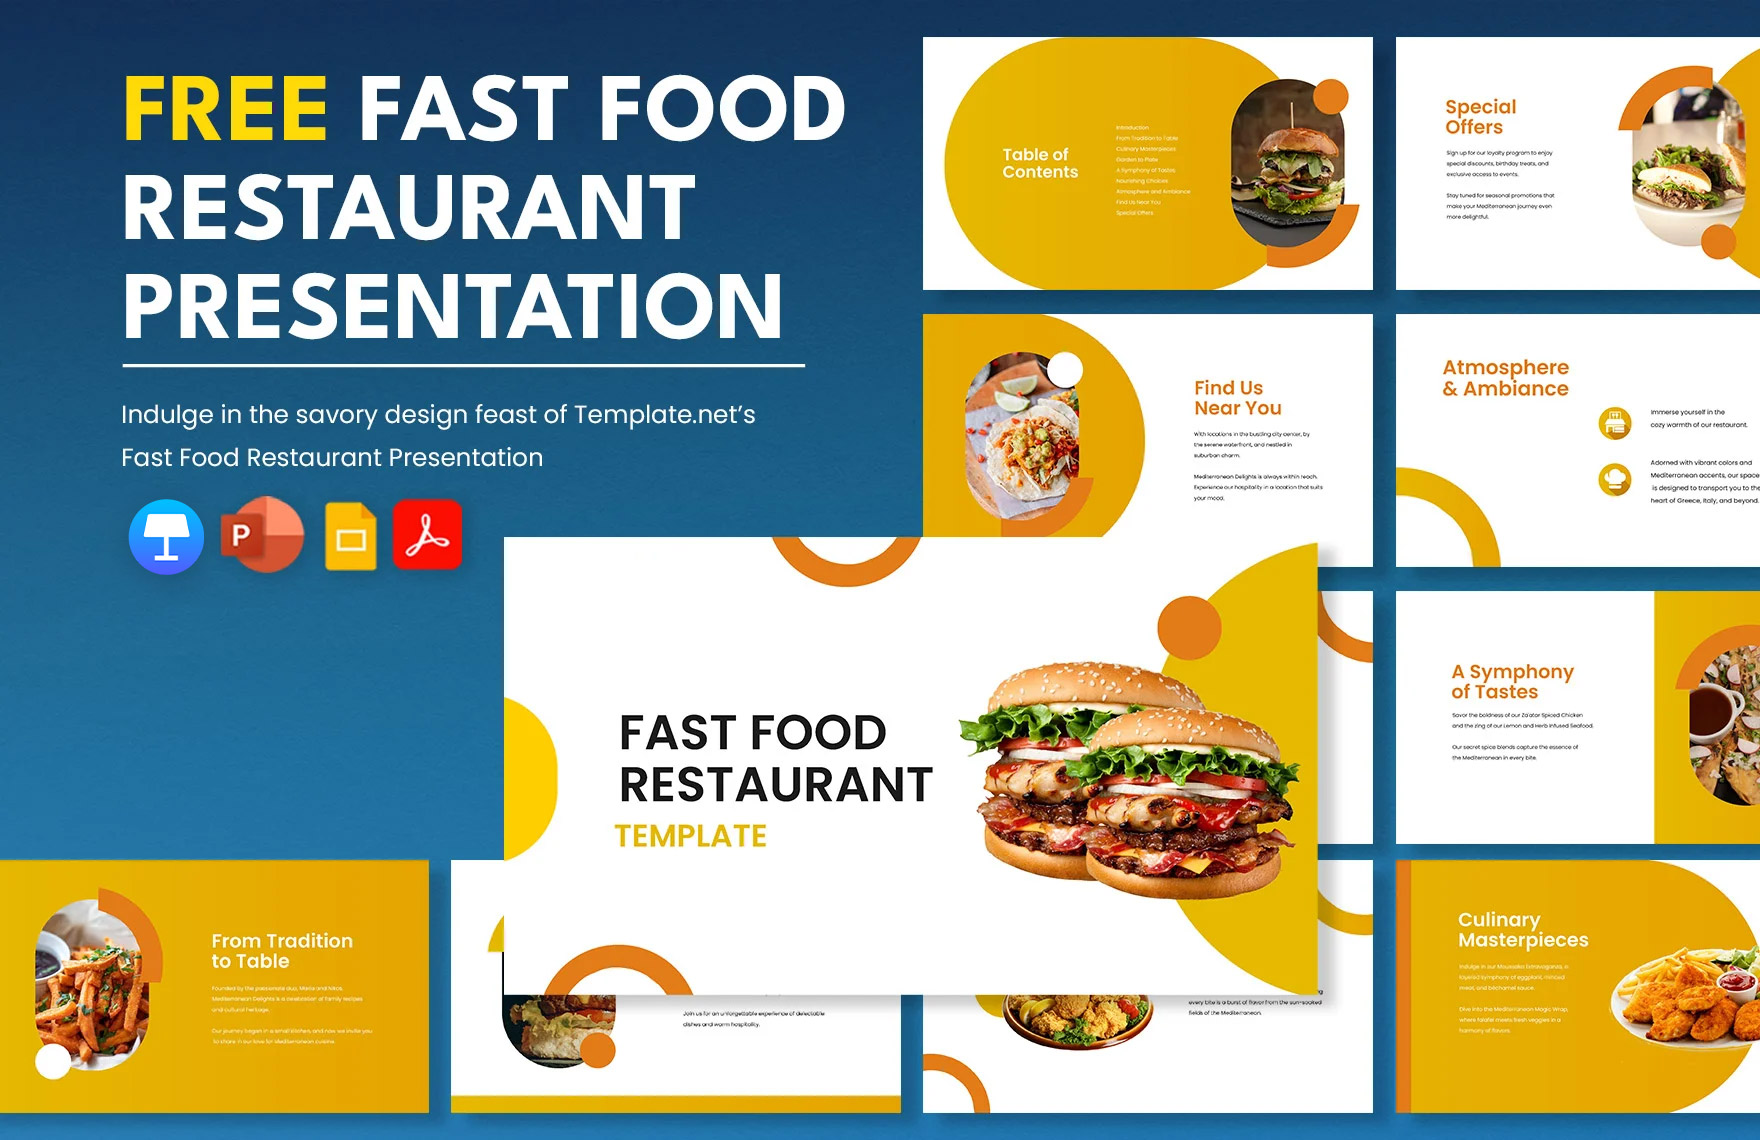 Fast Food Restaurant Template